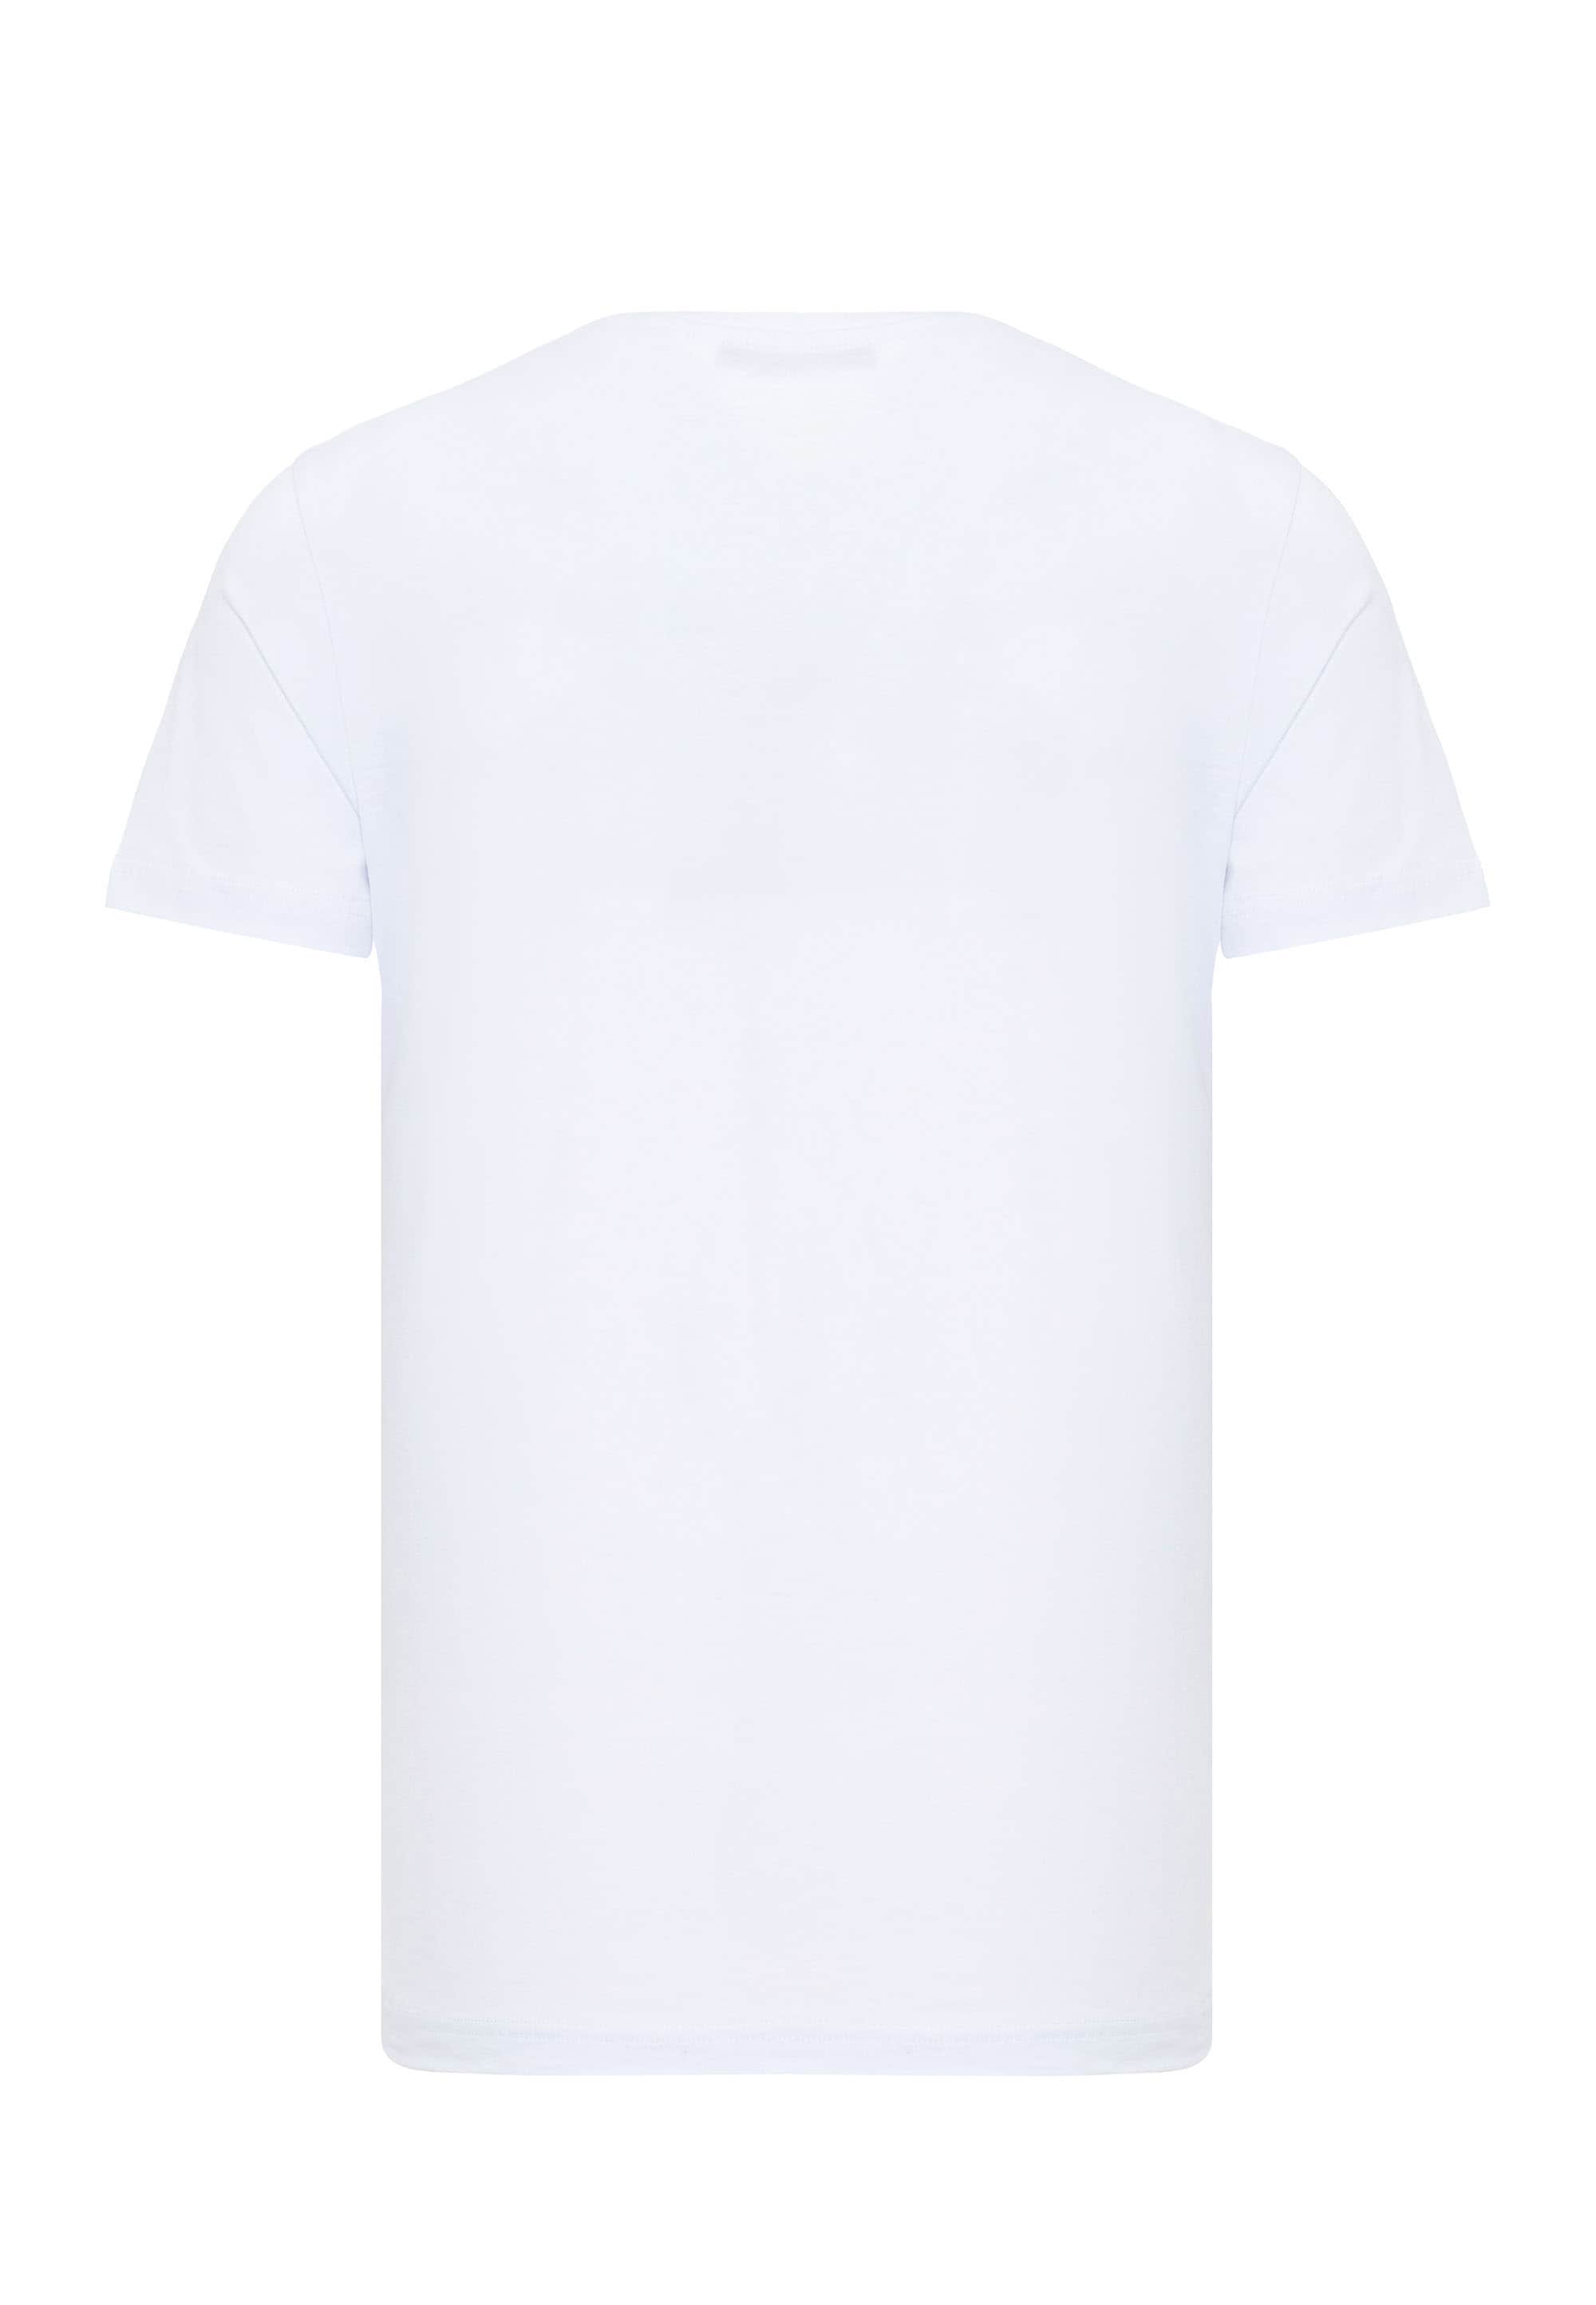 Cipo & Baxx T-Shirt, mit großem Money-Frontprint